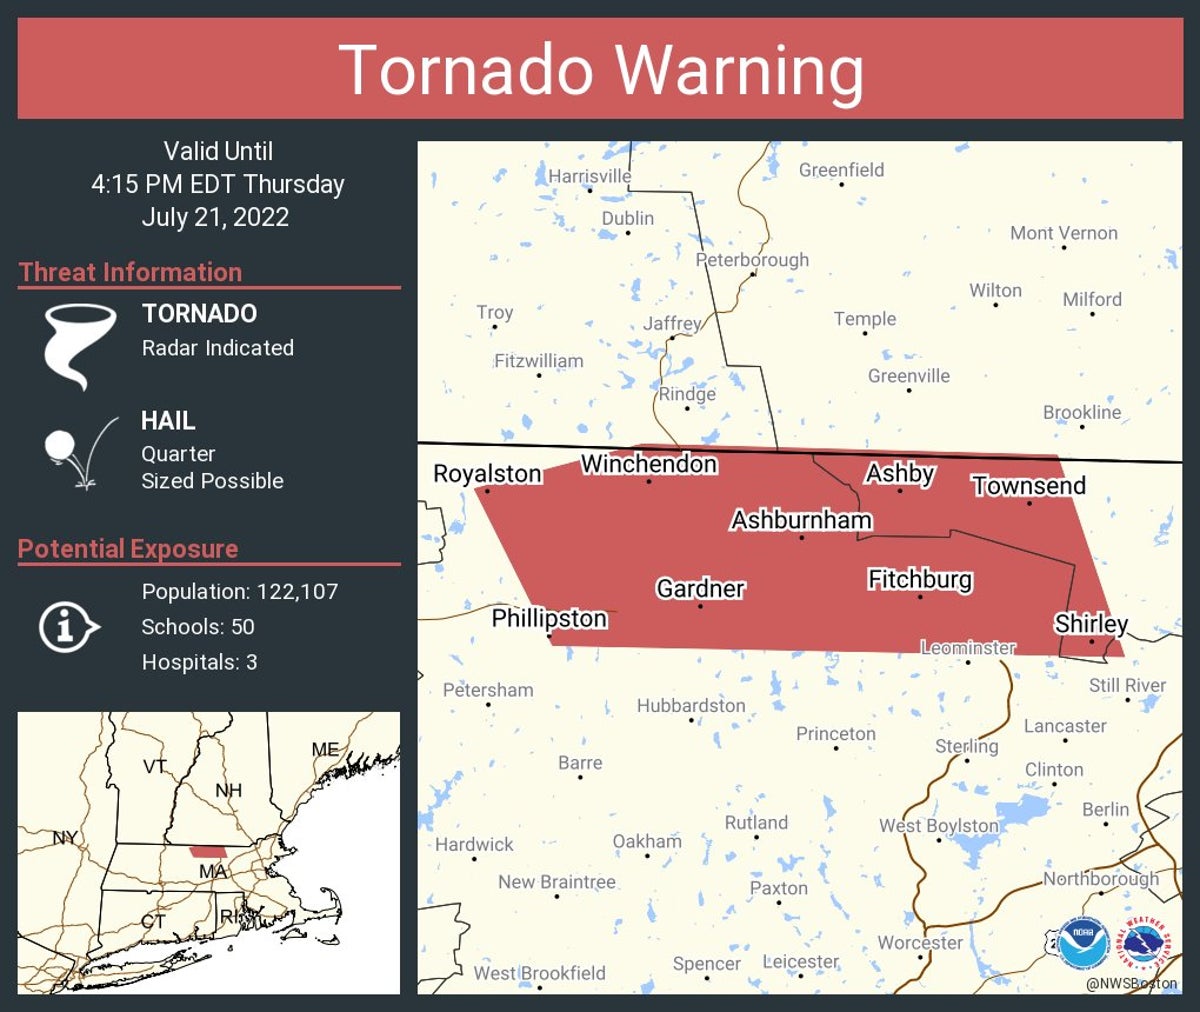 Tornado warning issued in Massachusetts amid severe thunderstorm